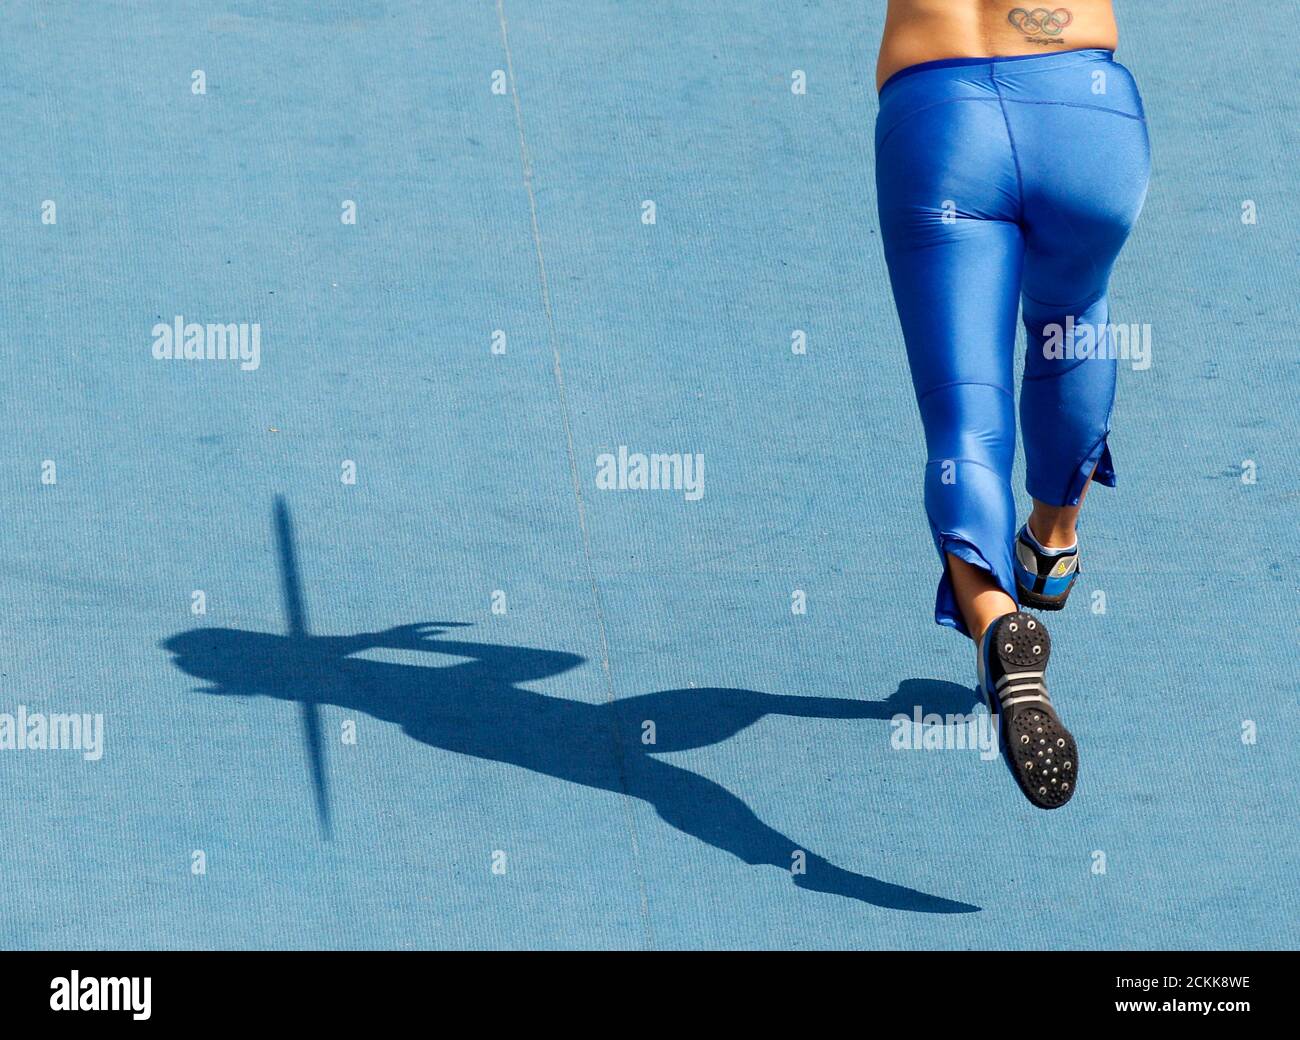 Asdis hjalmsdottir athletics hi-res stock photography and images - Alamy